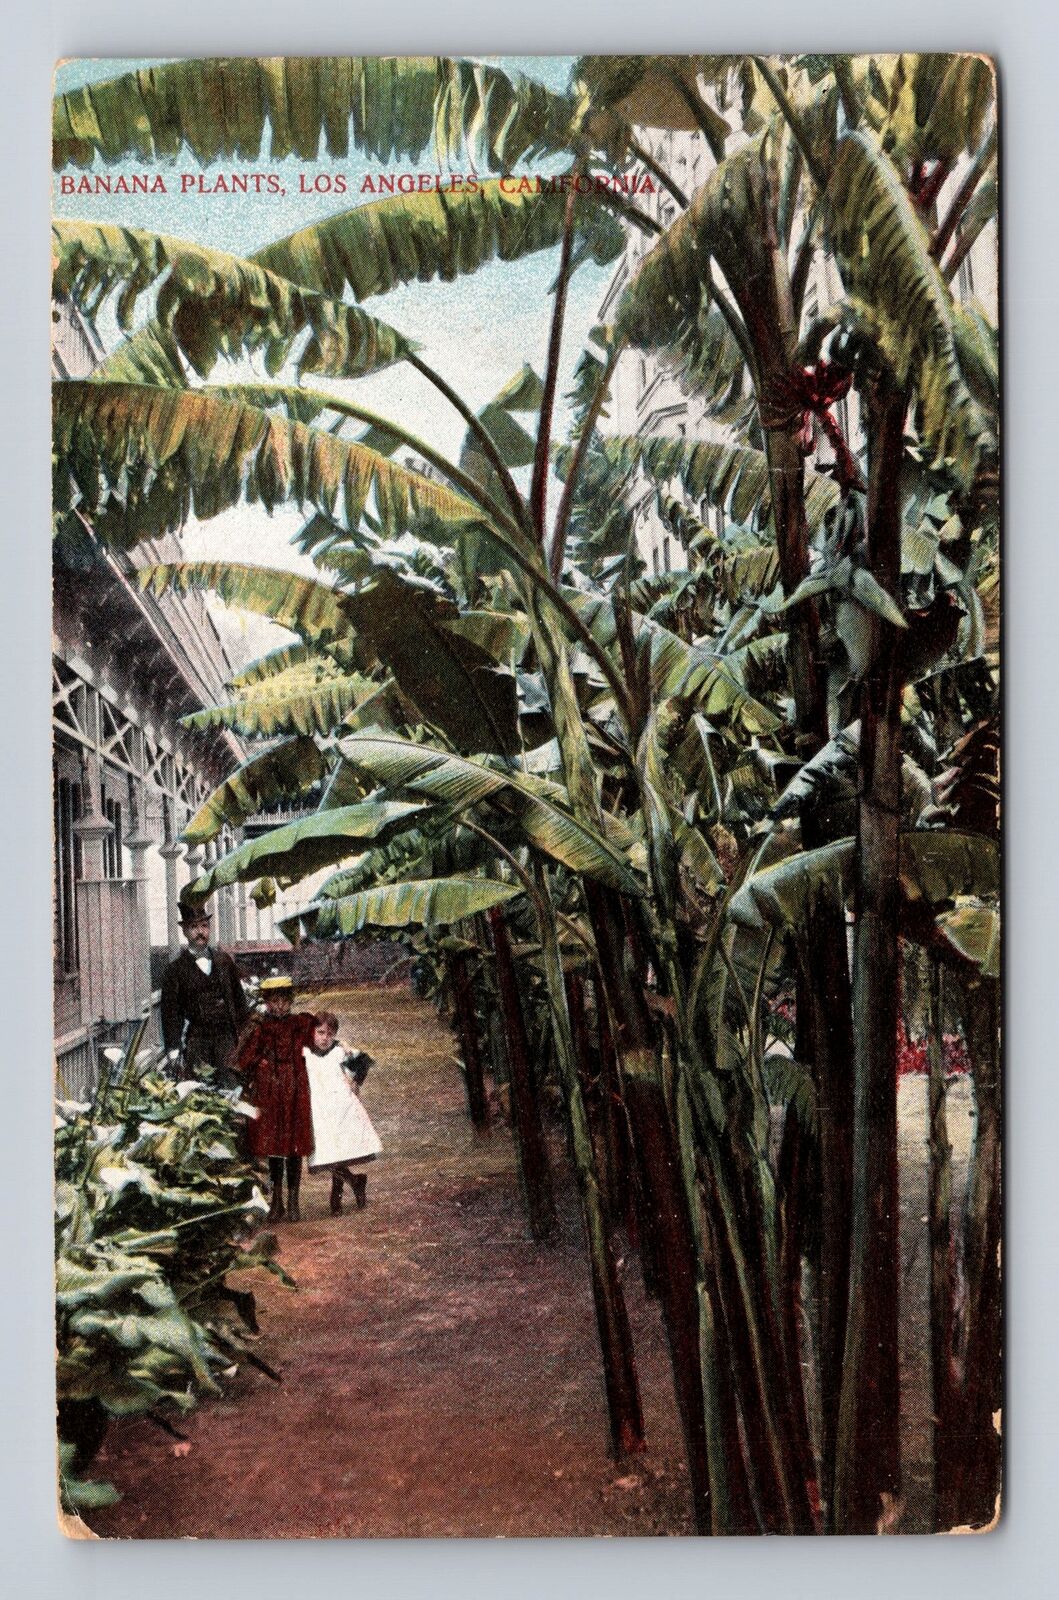 Los Angeles CA-California, Banana Plants, Antique, Vintage Souvenir Postcard